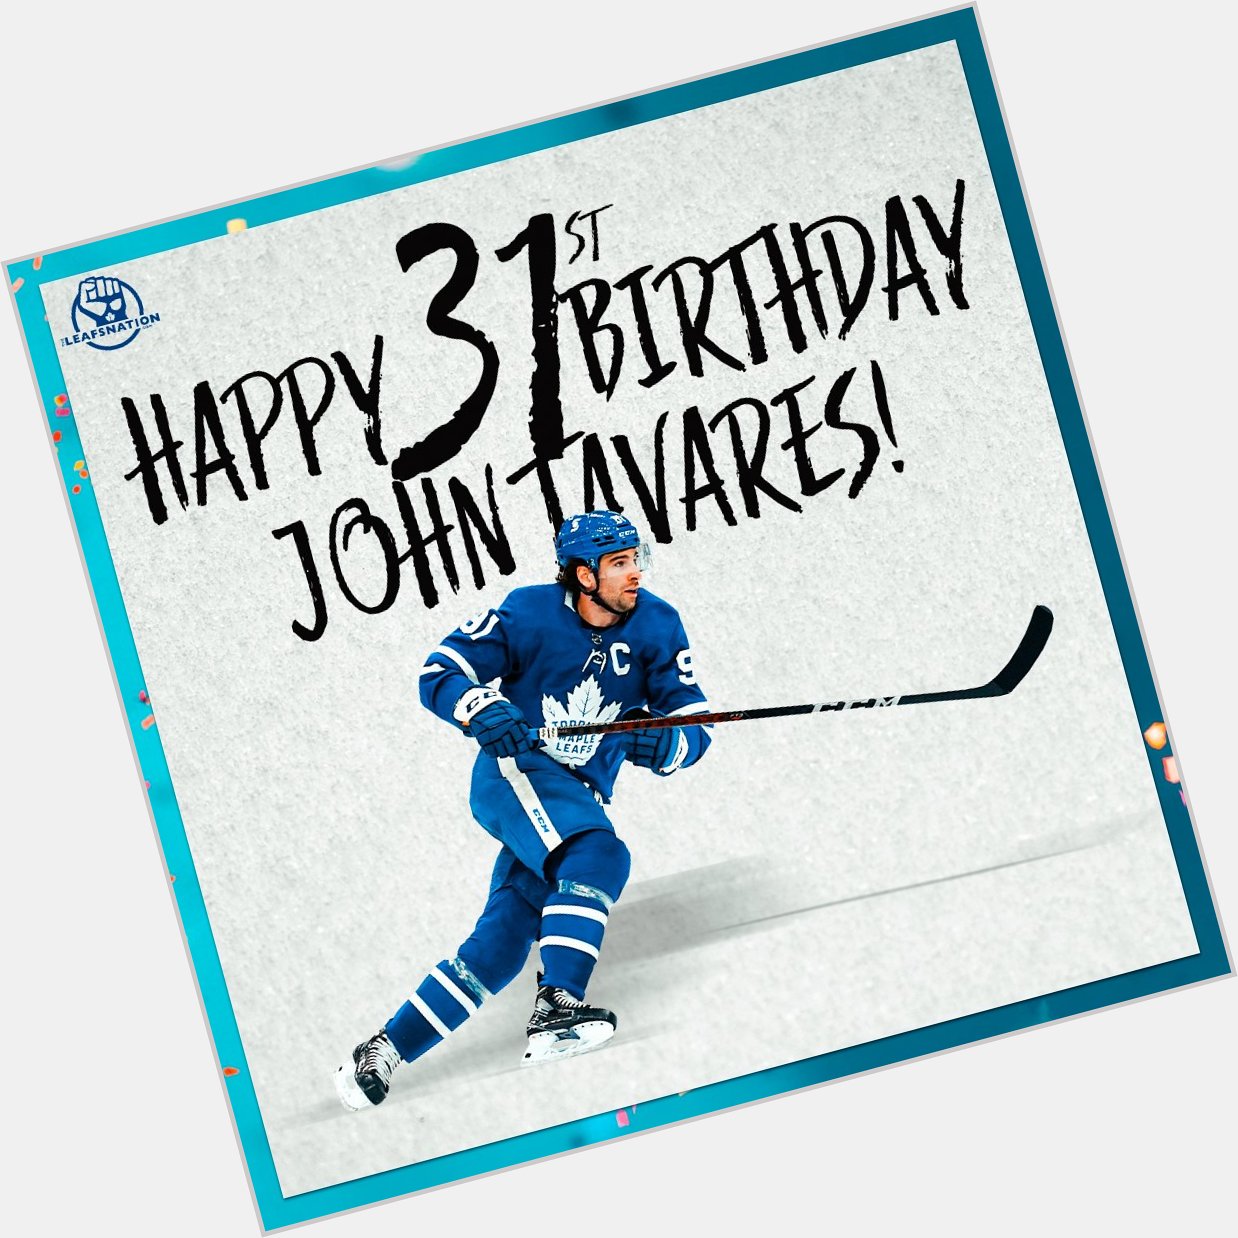 Happy 31st Birthday to John Tavares! 